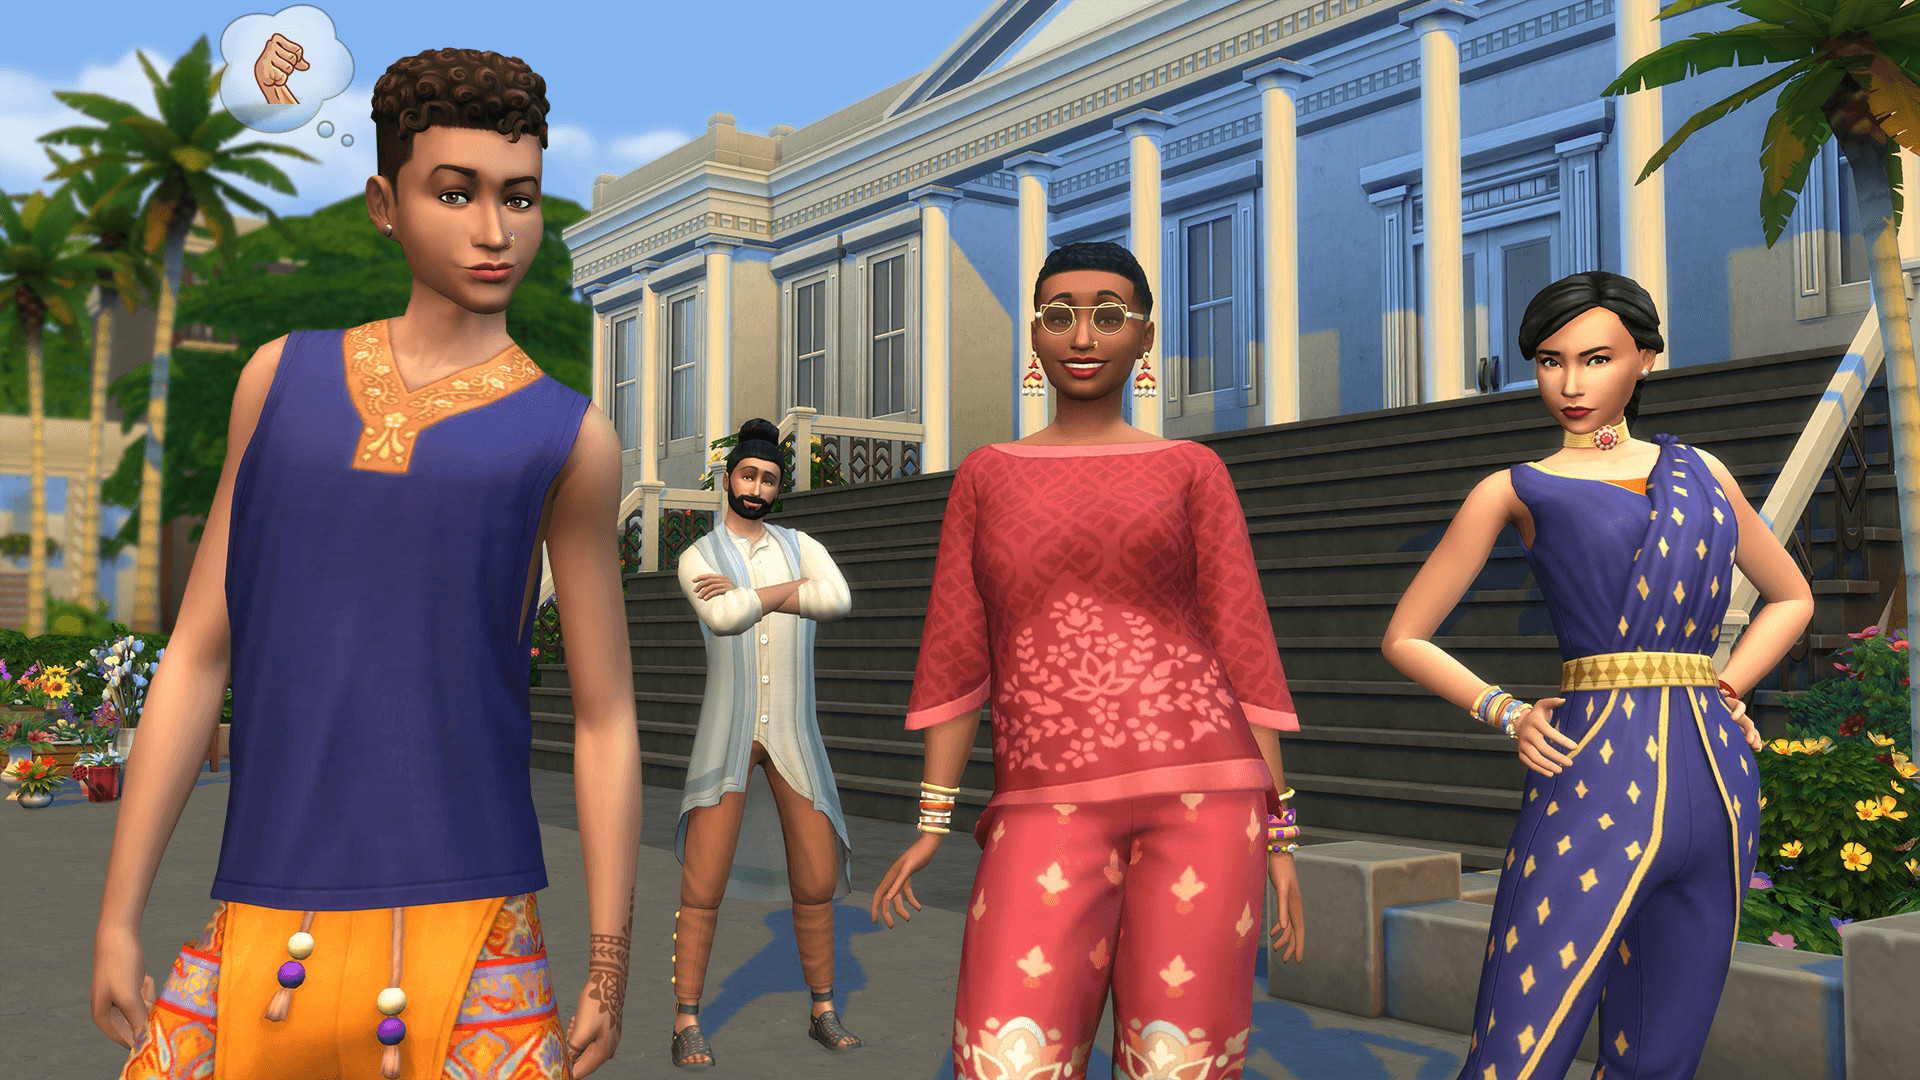 The Sims 4 - Fashion Street Kit DLC Origin CD Key